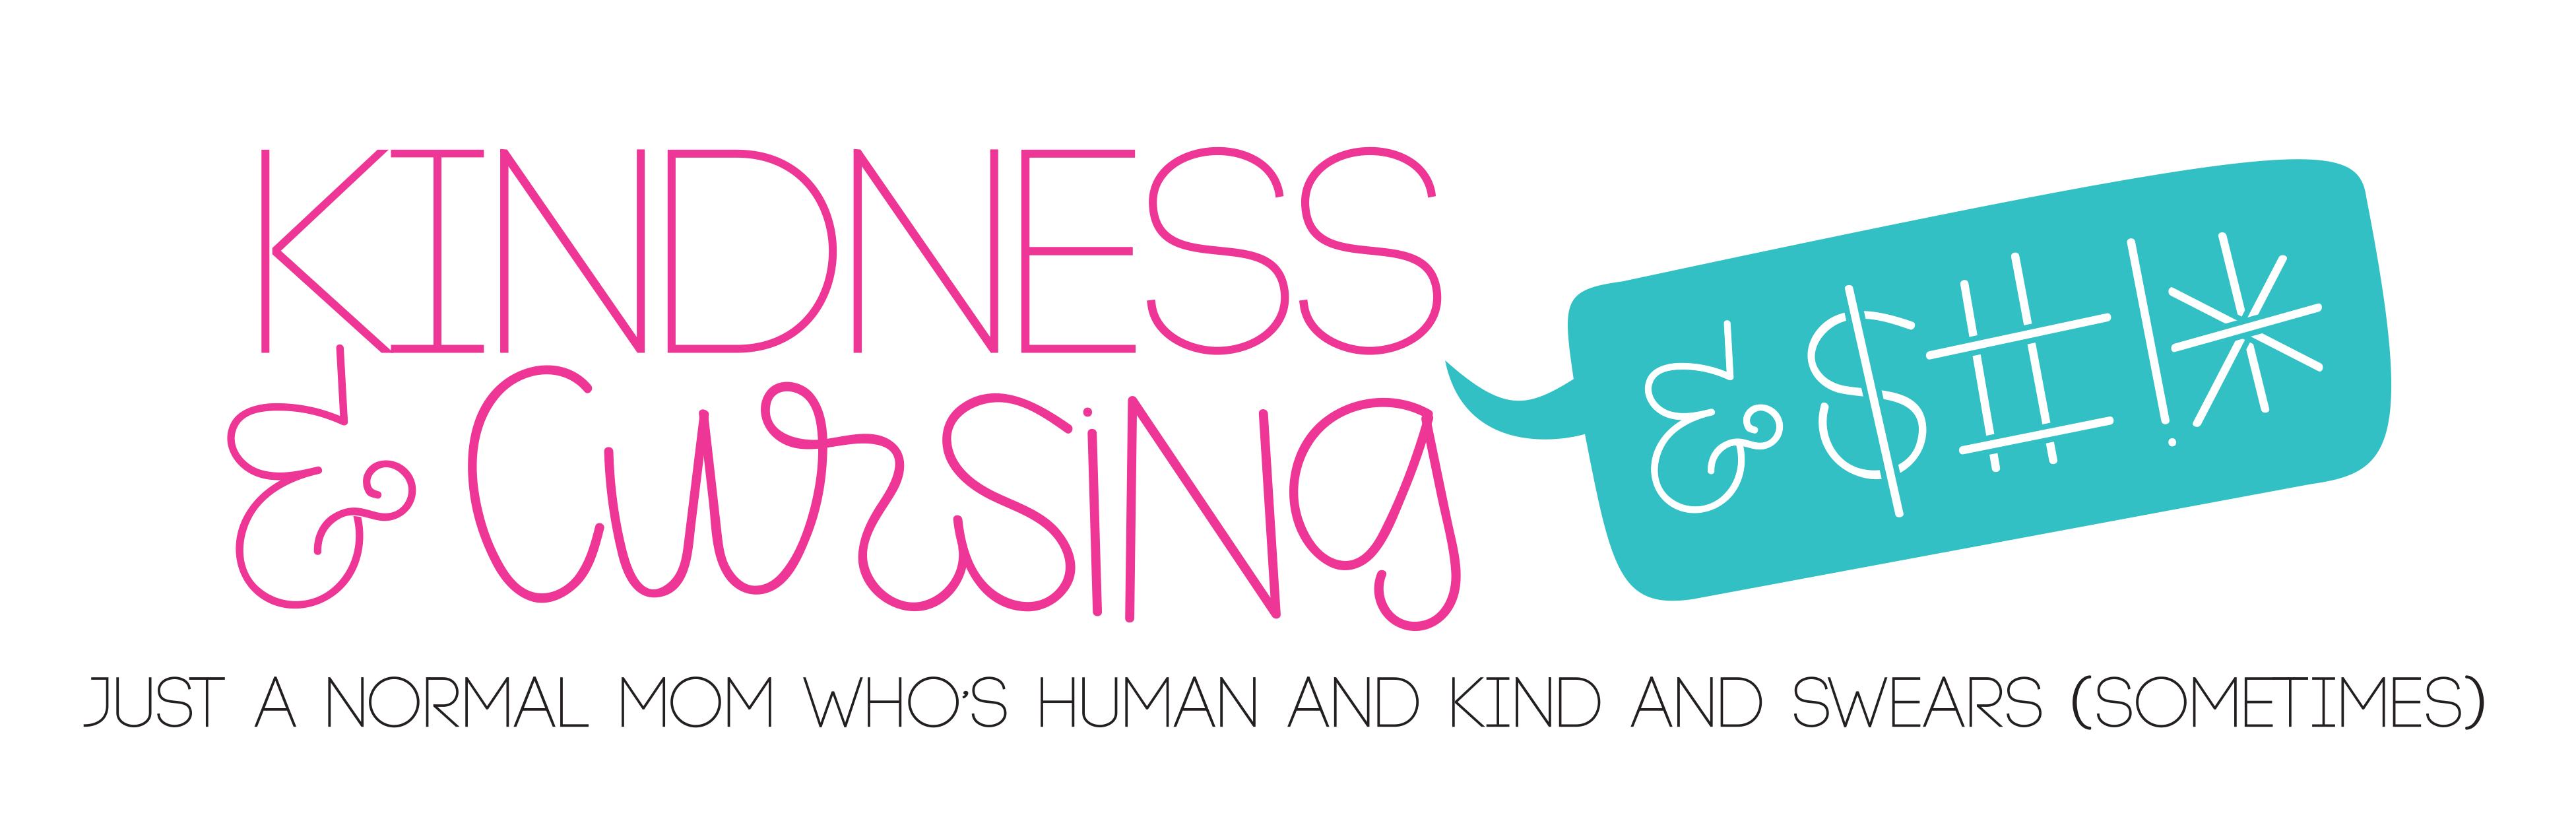 Kindness & Cursing